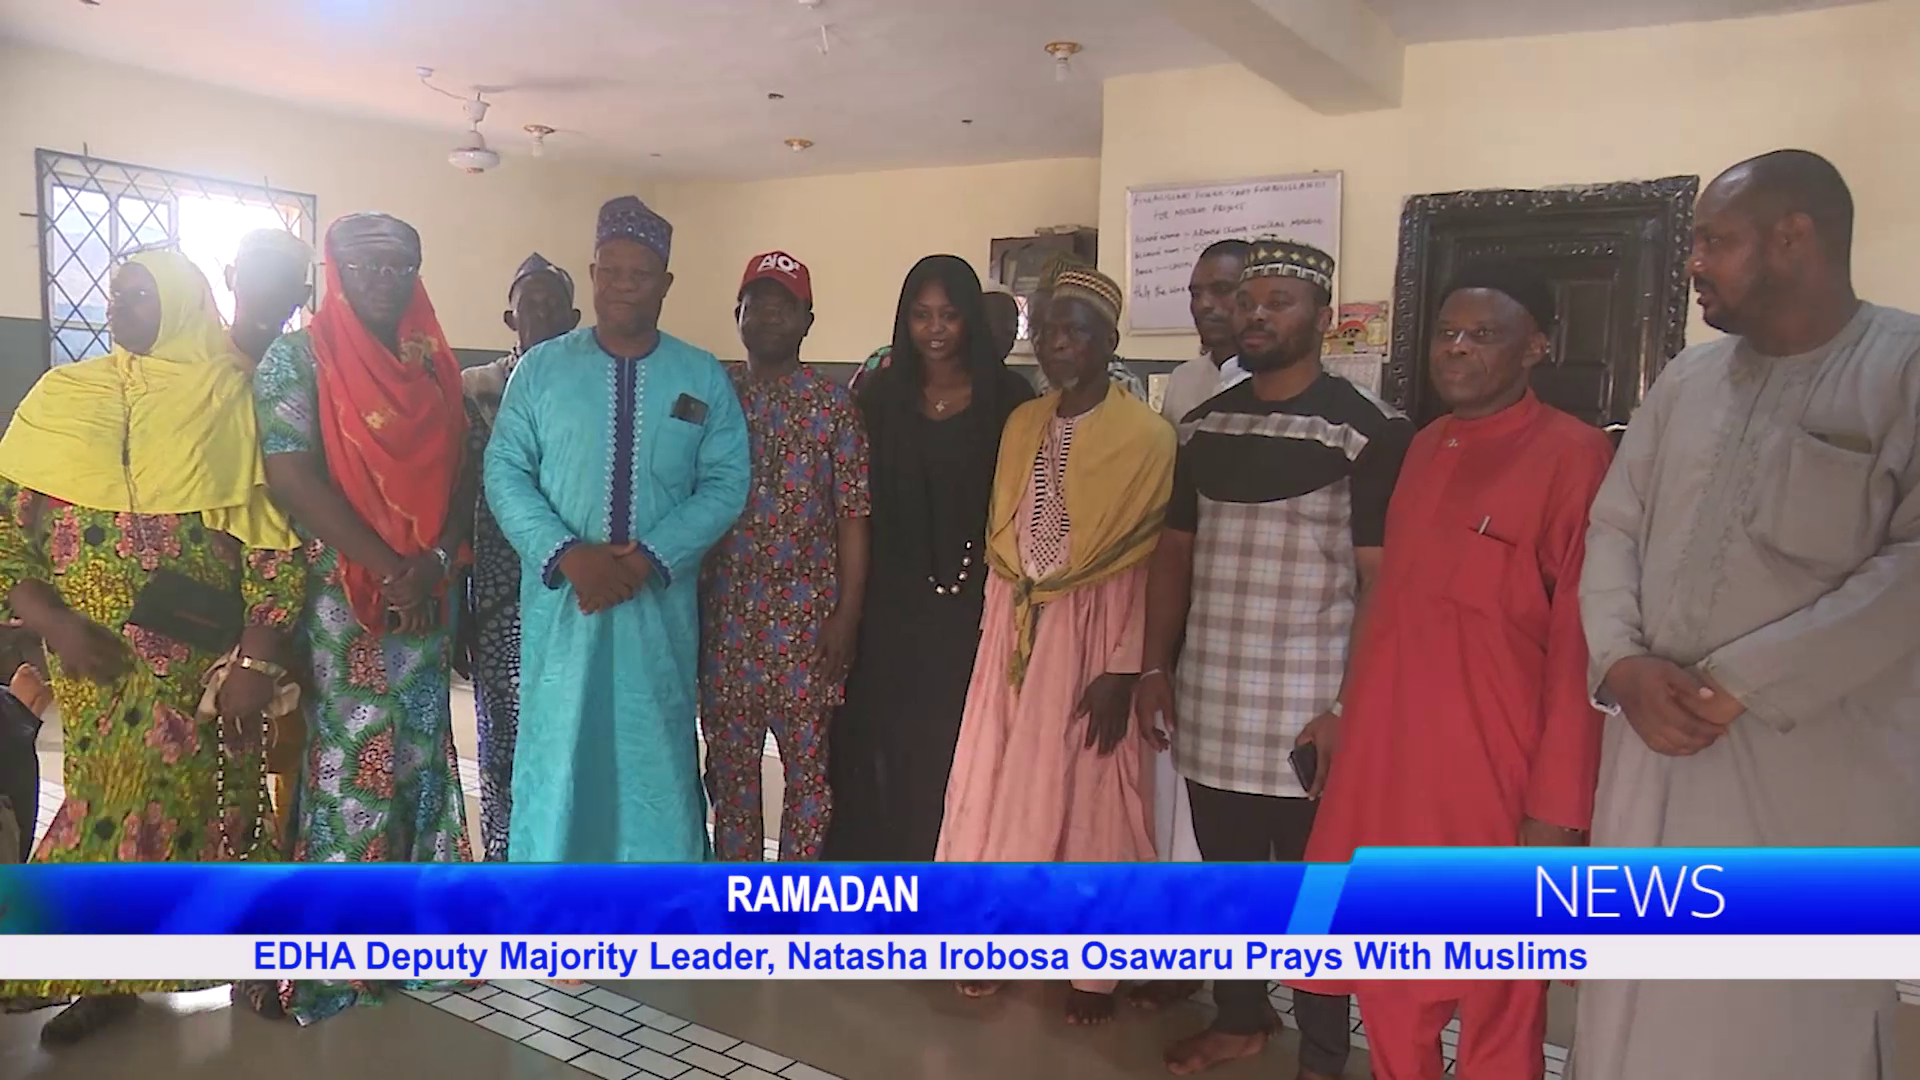 EDHA Deputy Majority Leader, Natasha Irobosa Osawaru Prays With Muslims